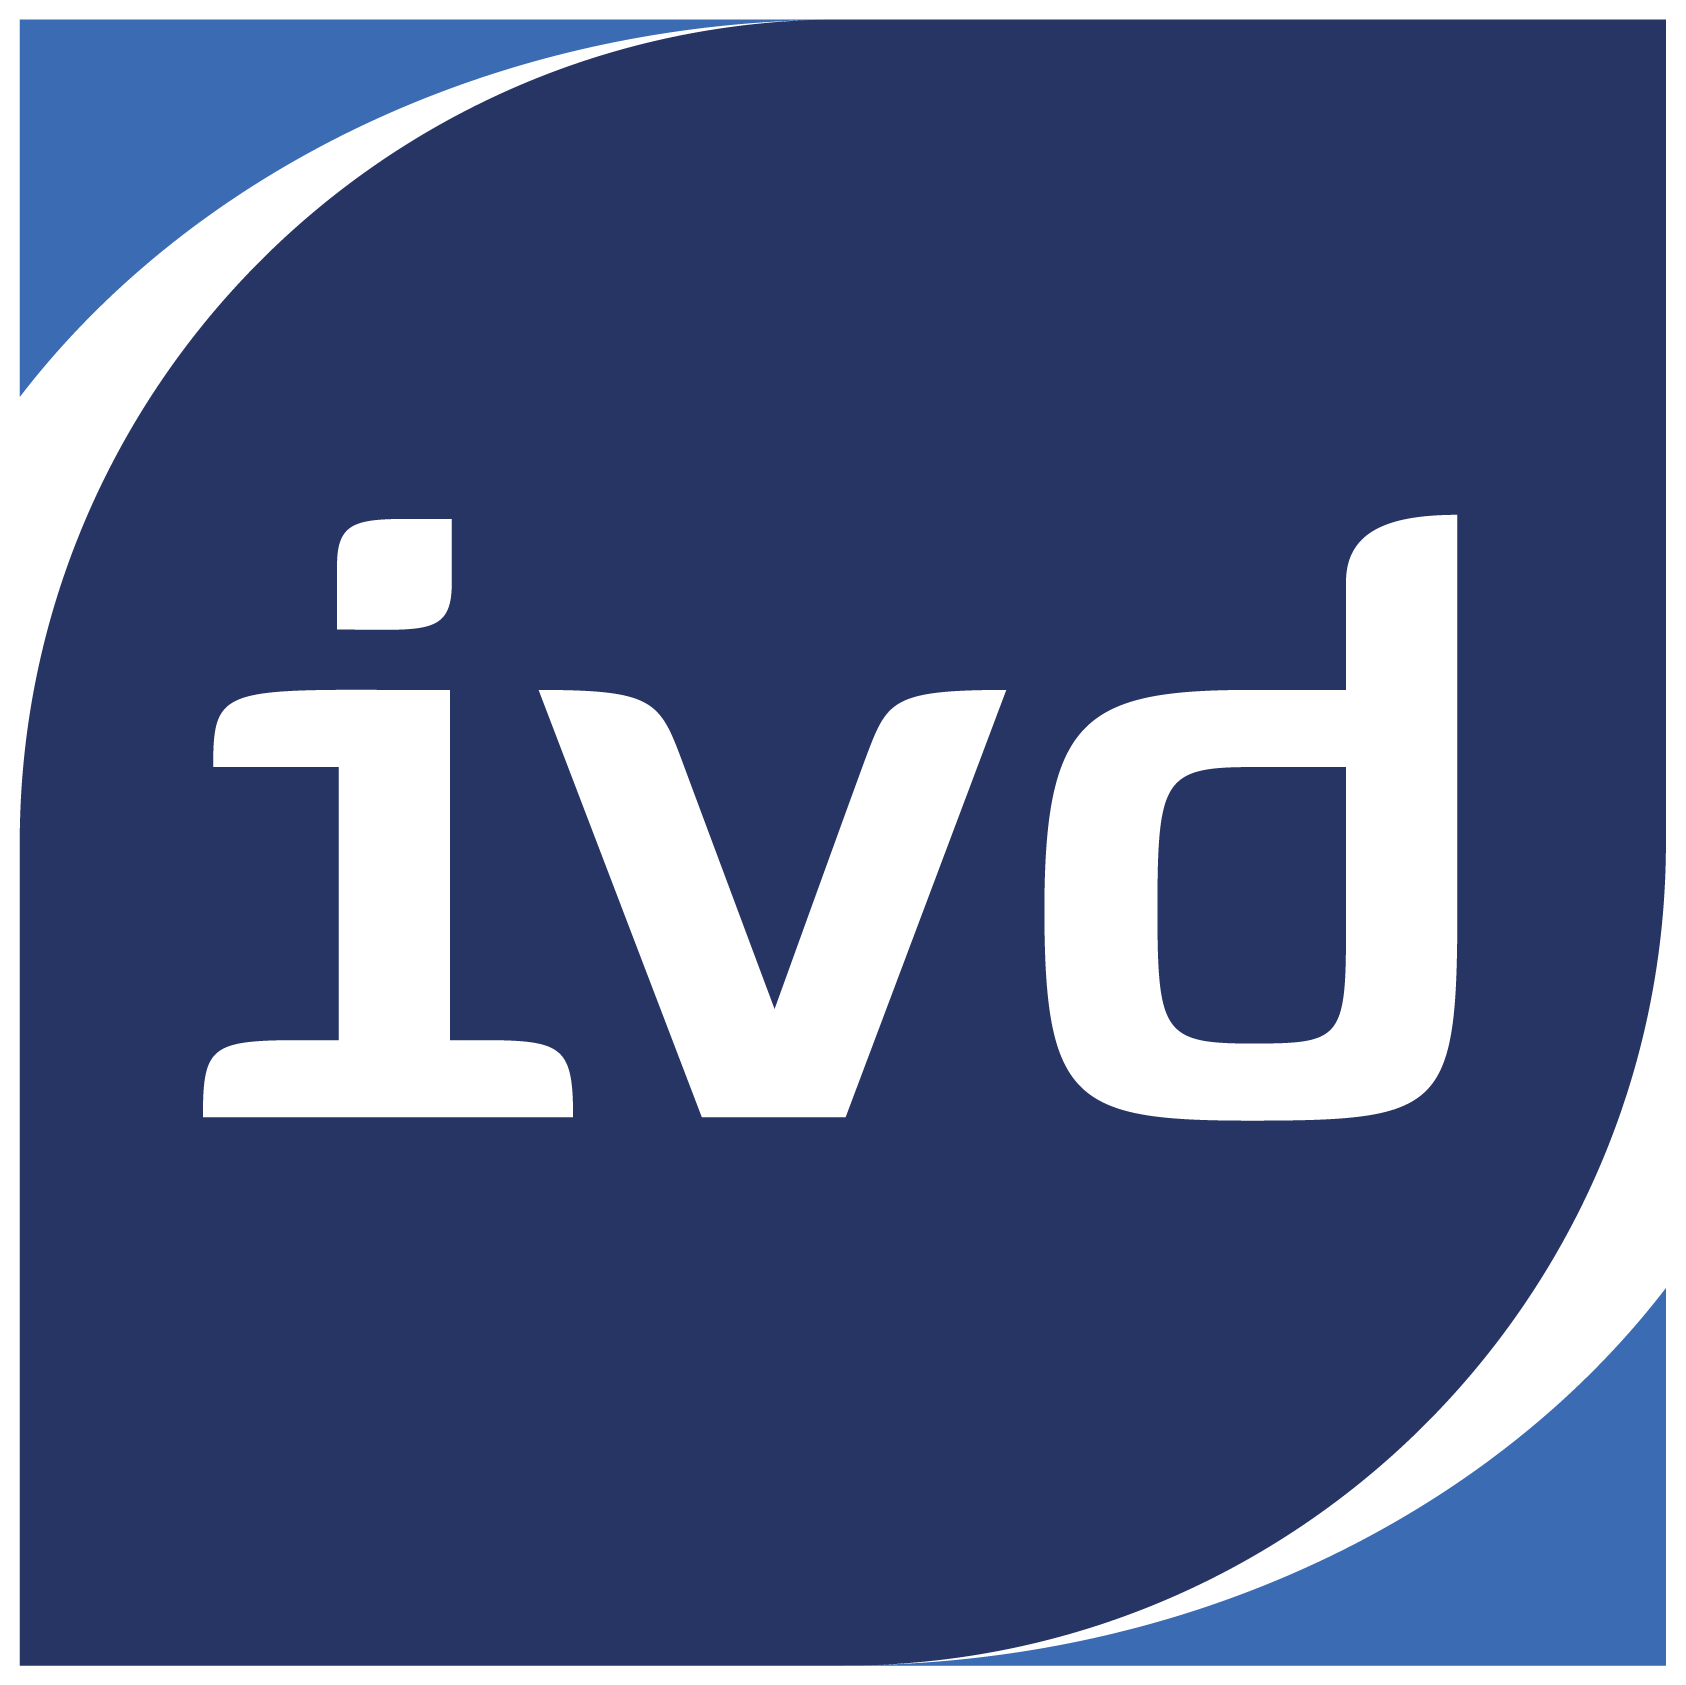 Makler in Berlin IVD Logo